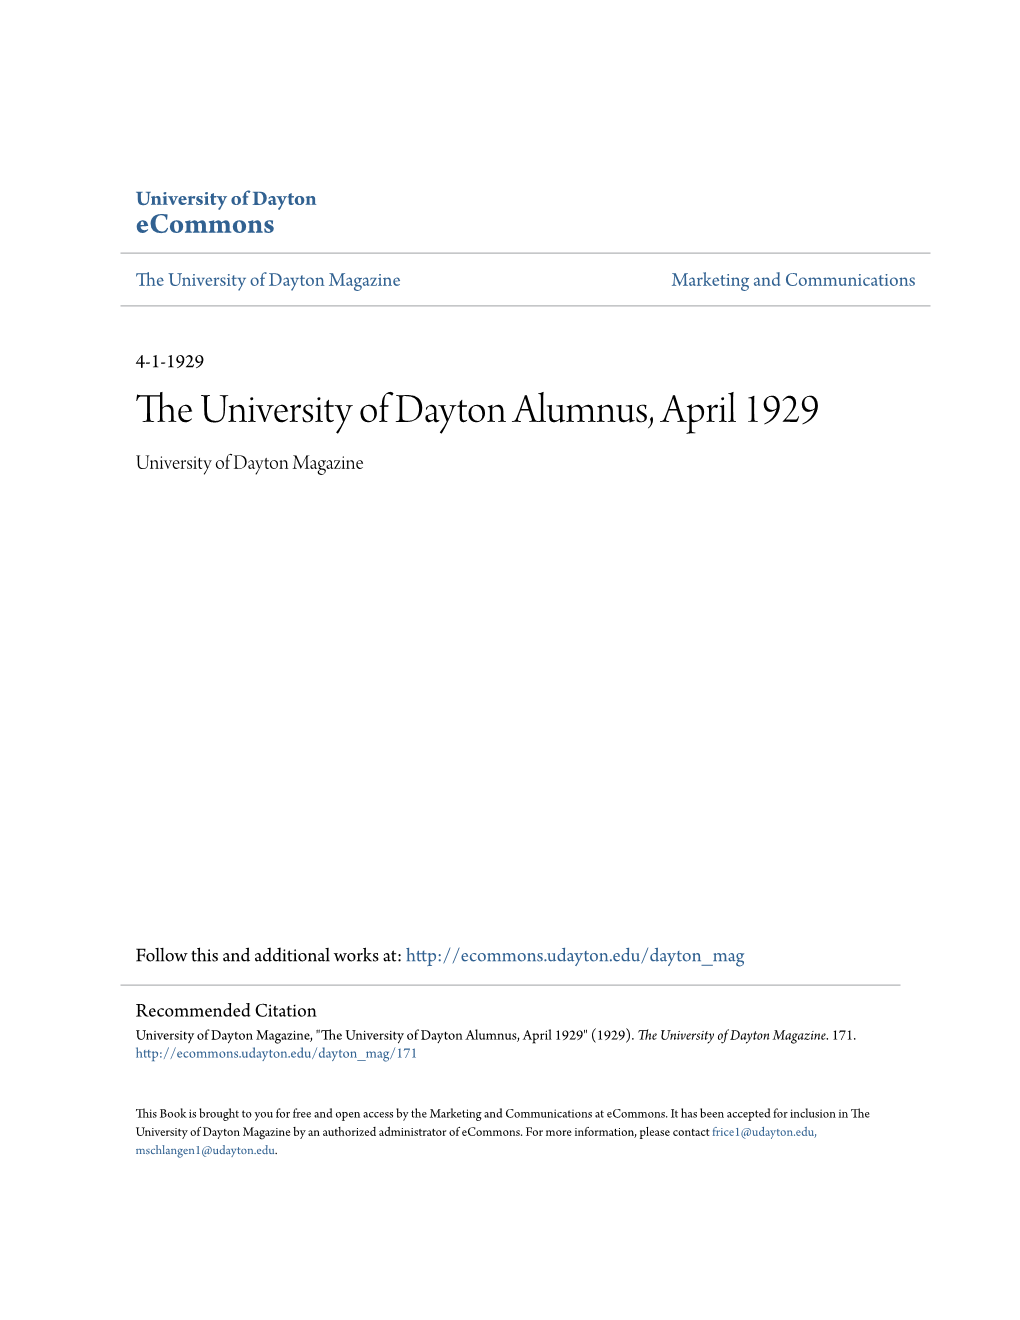 The University of Dayton Alumnus, April 1929